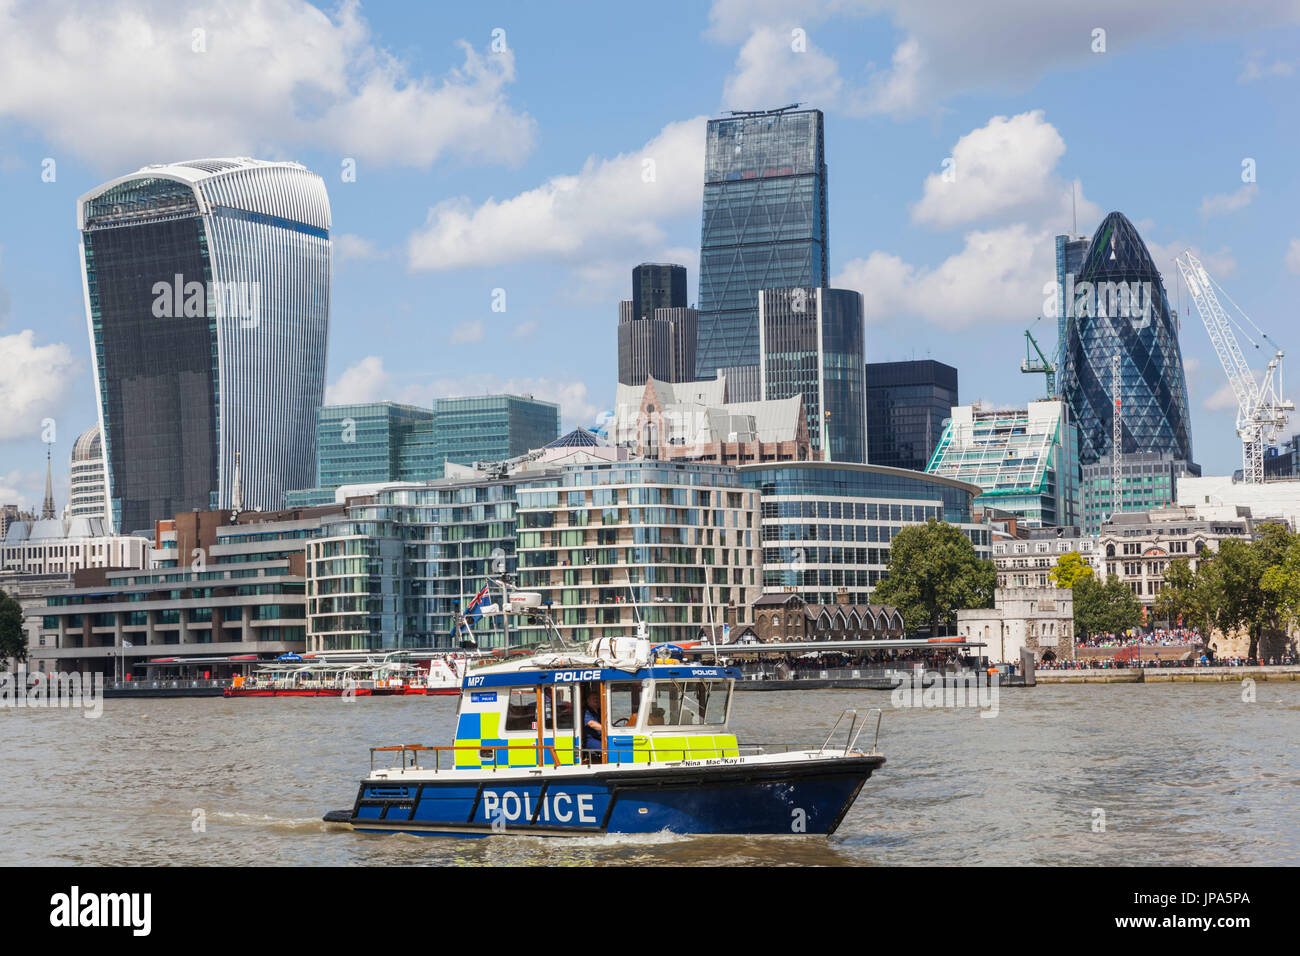 England, London, Thames River Police Stock Photo